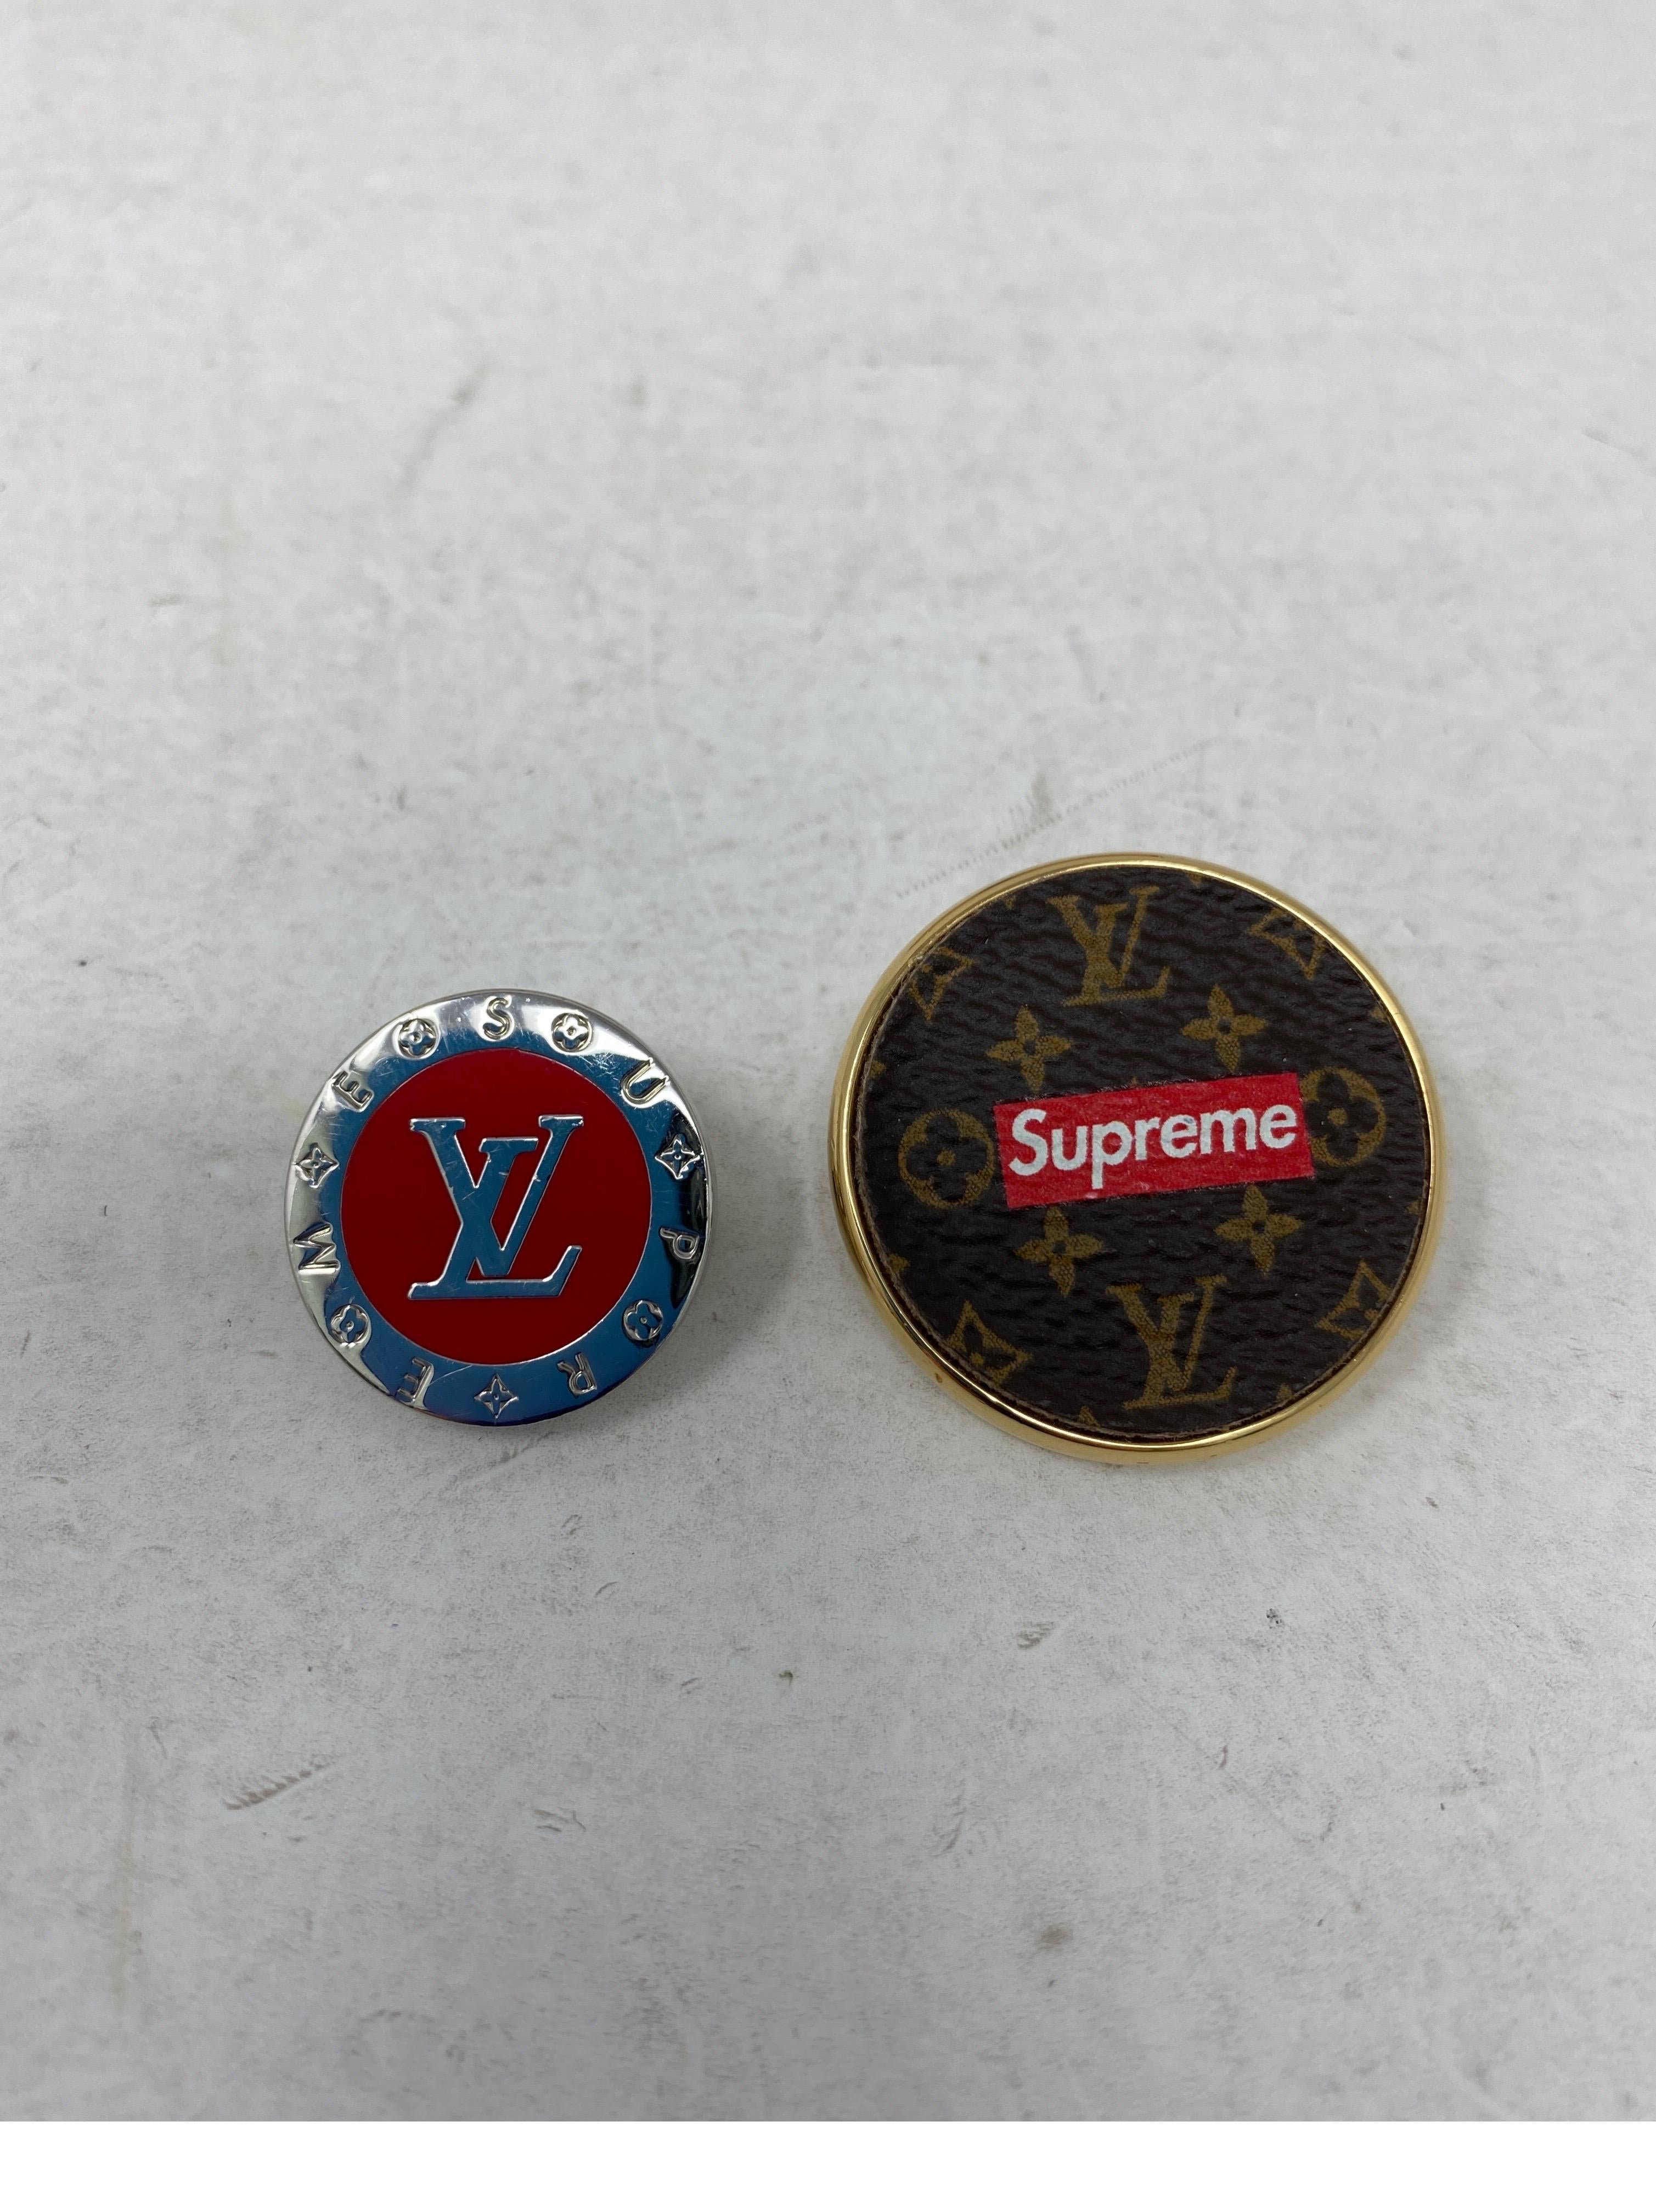 supreme pins